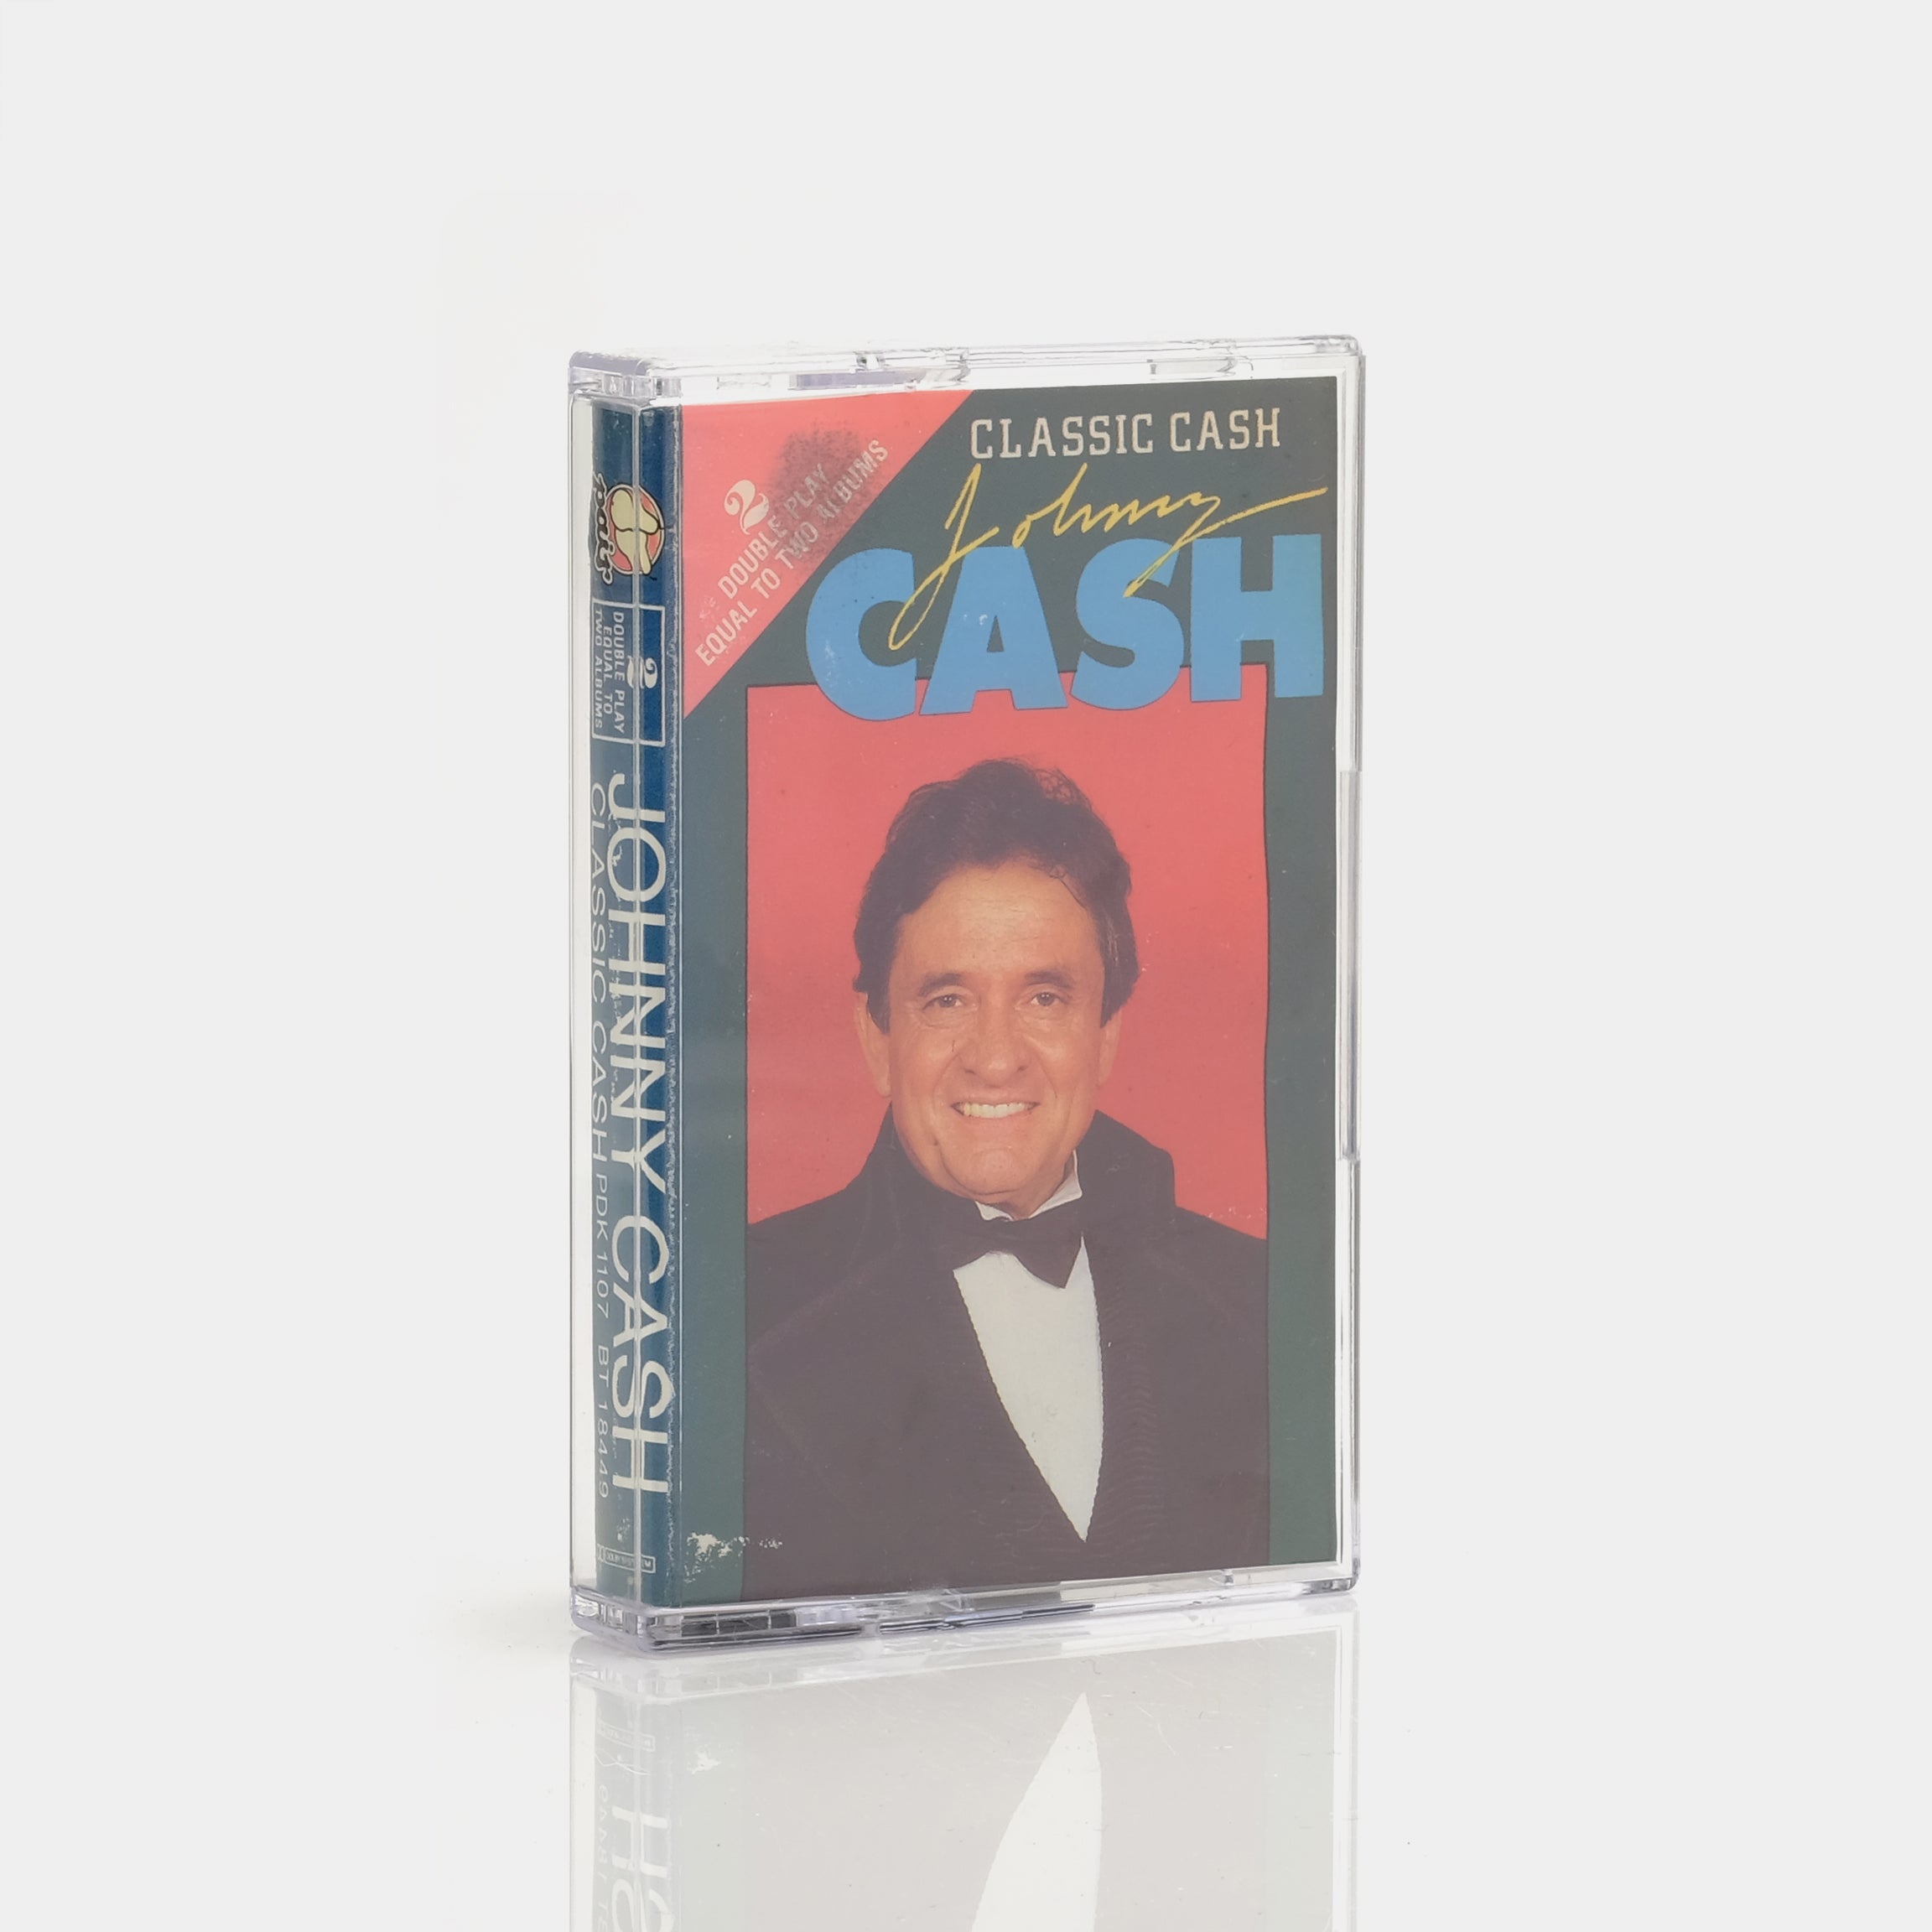 Johnny Cash - Classic Cash Greatest Hits Cassette Tape